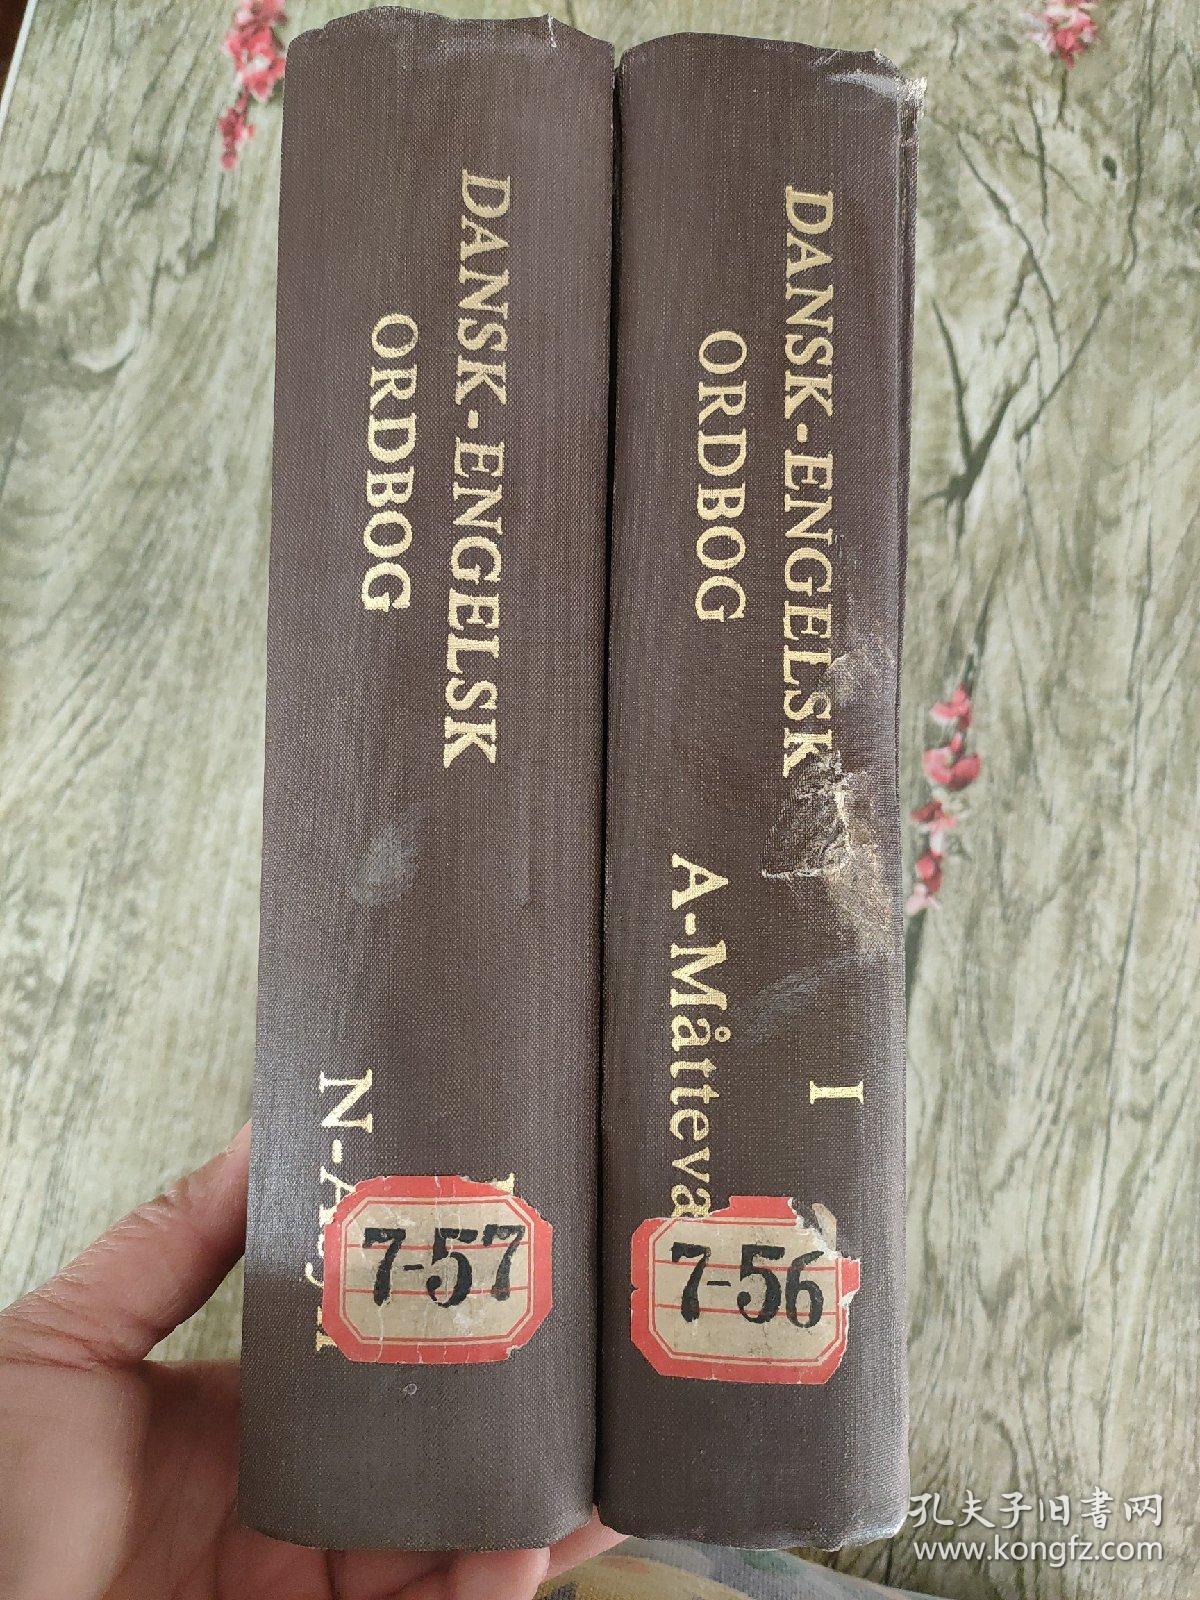 Dansk-Engelsk Ordbog.1-2 丹英词典 2卷2册全【丹麦语-英语对照 布面精装】